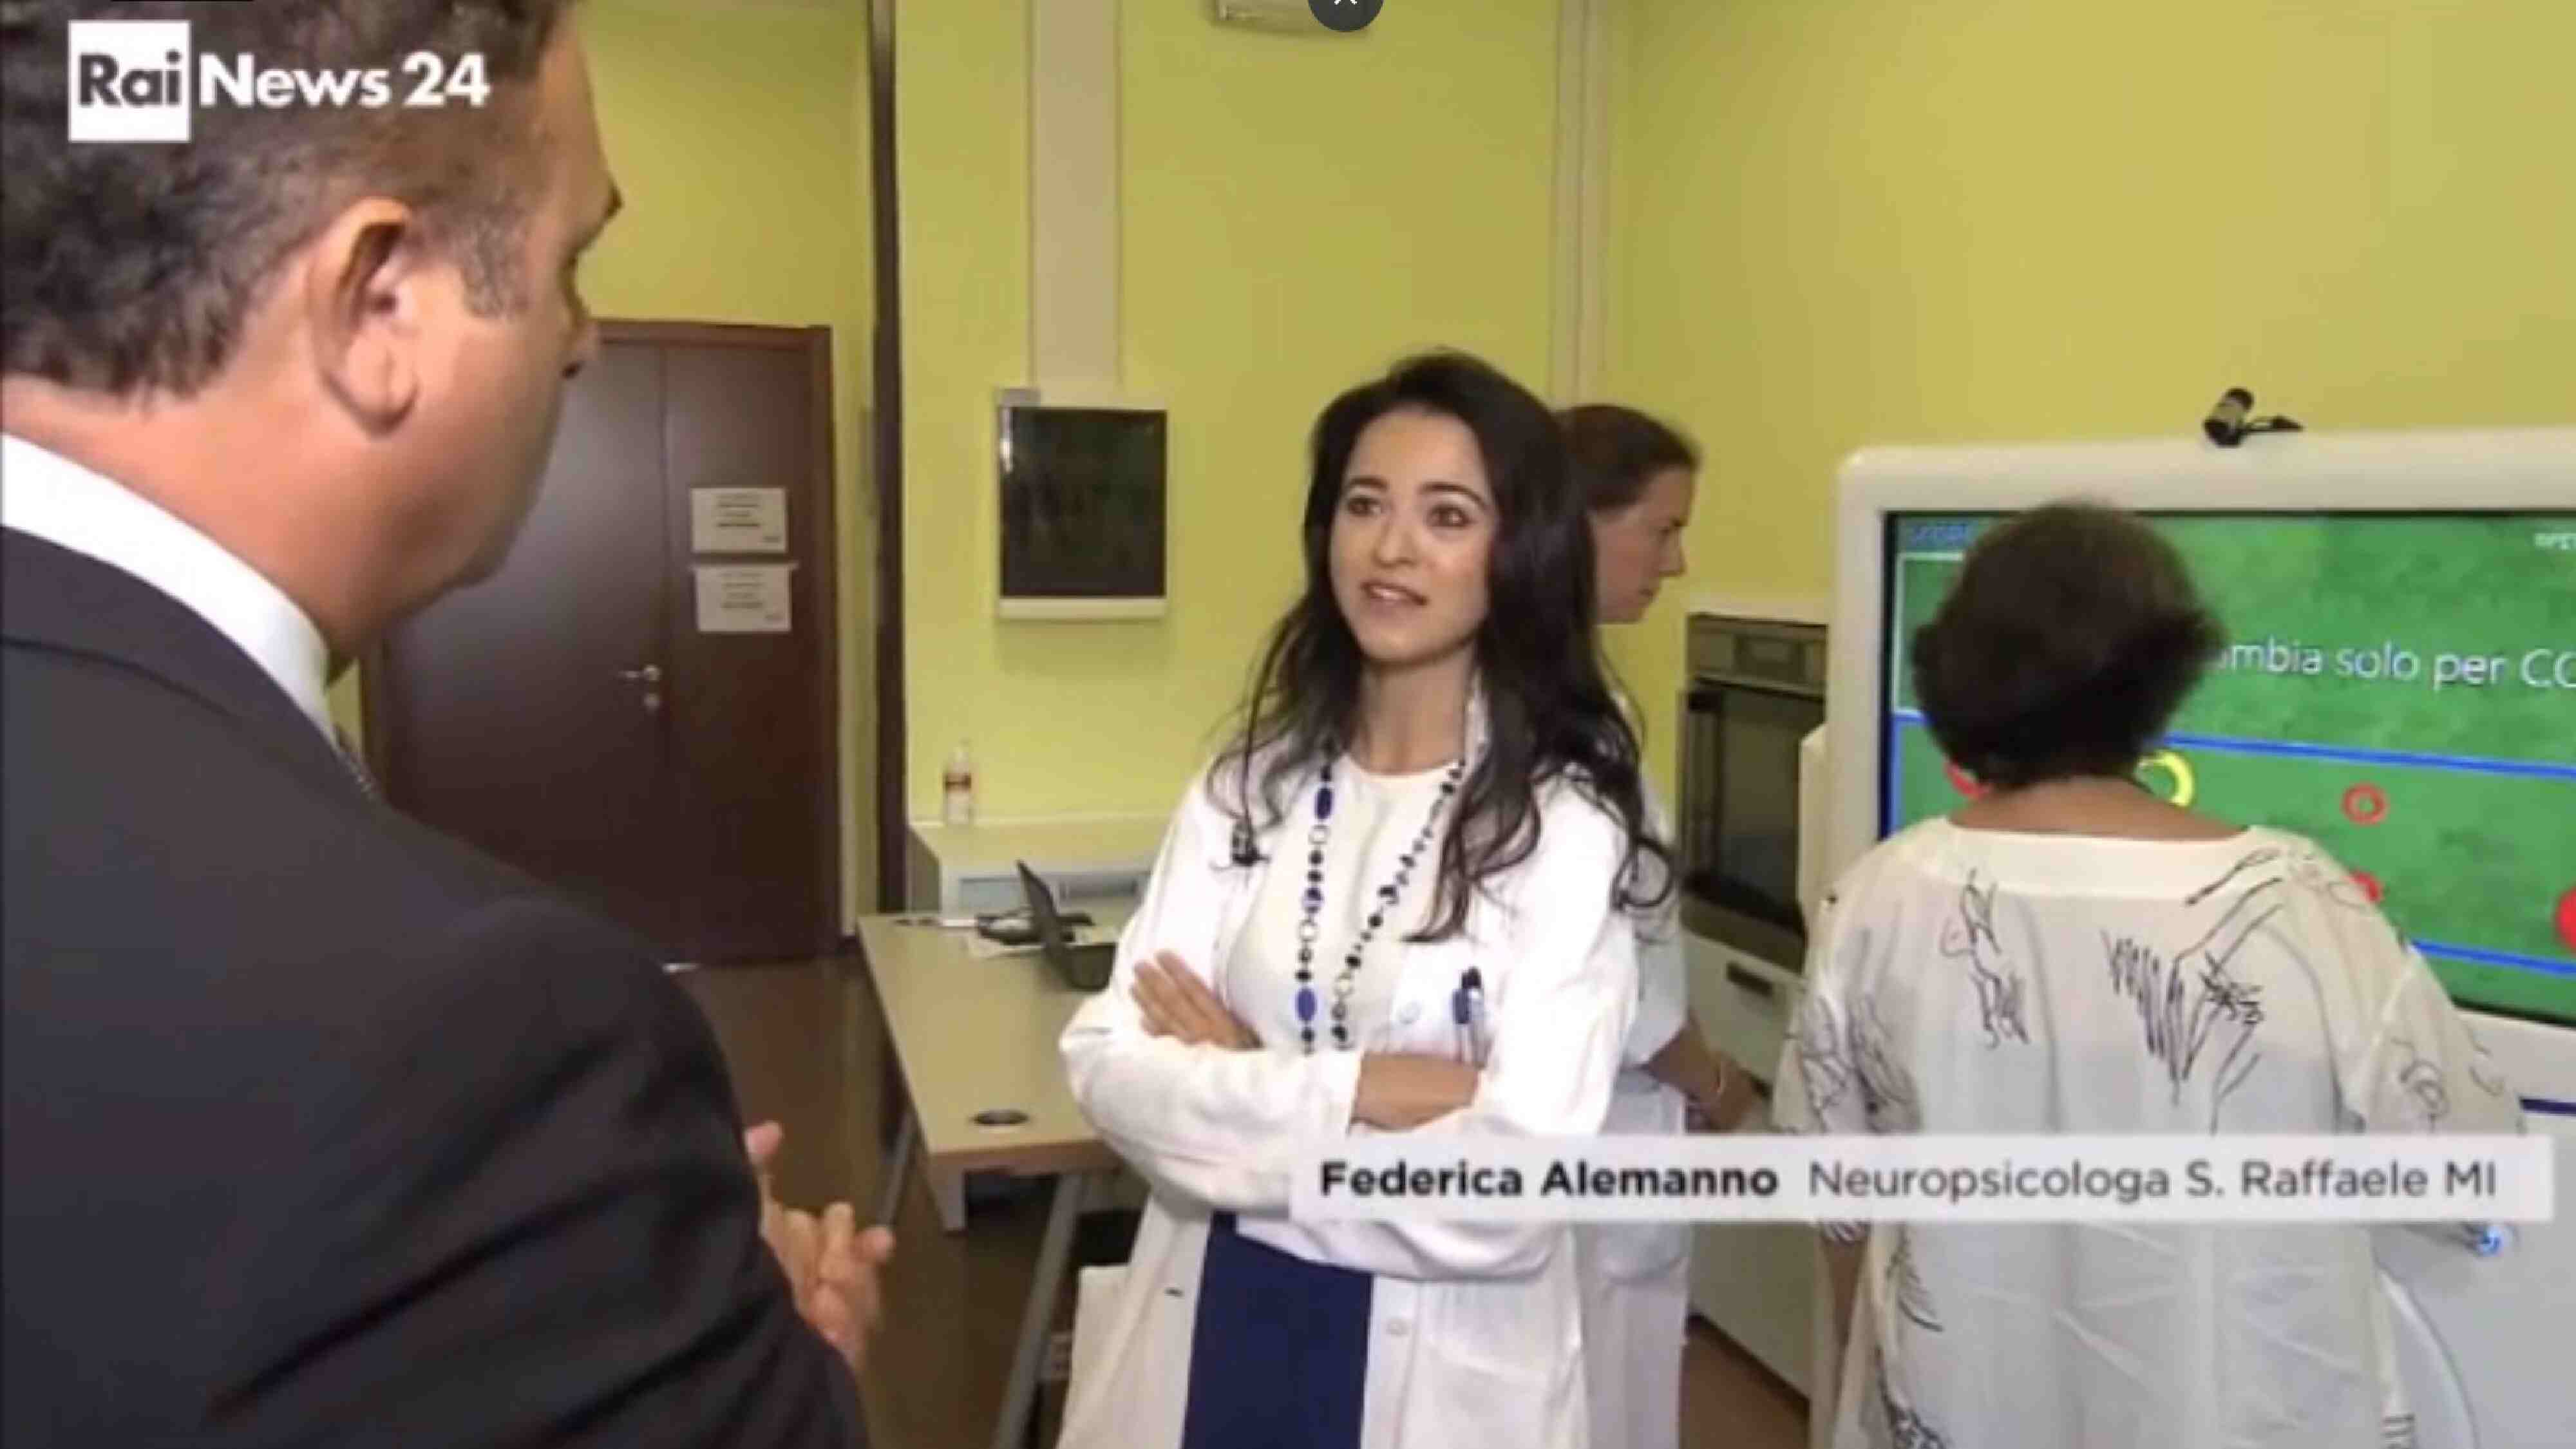 RaiNews24: Khymeia, l’eccellenza italiana in teleriabilitazione all’Ospedale San Raffaele